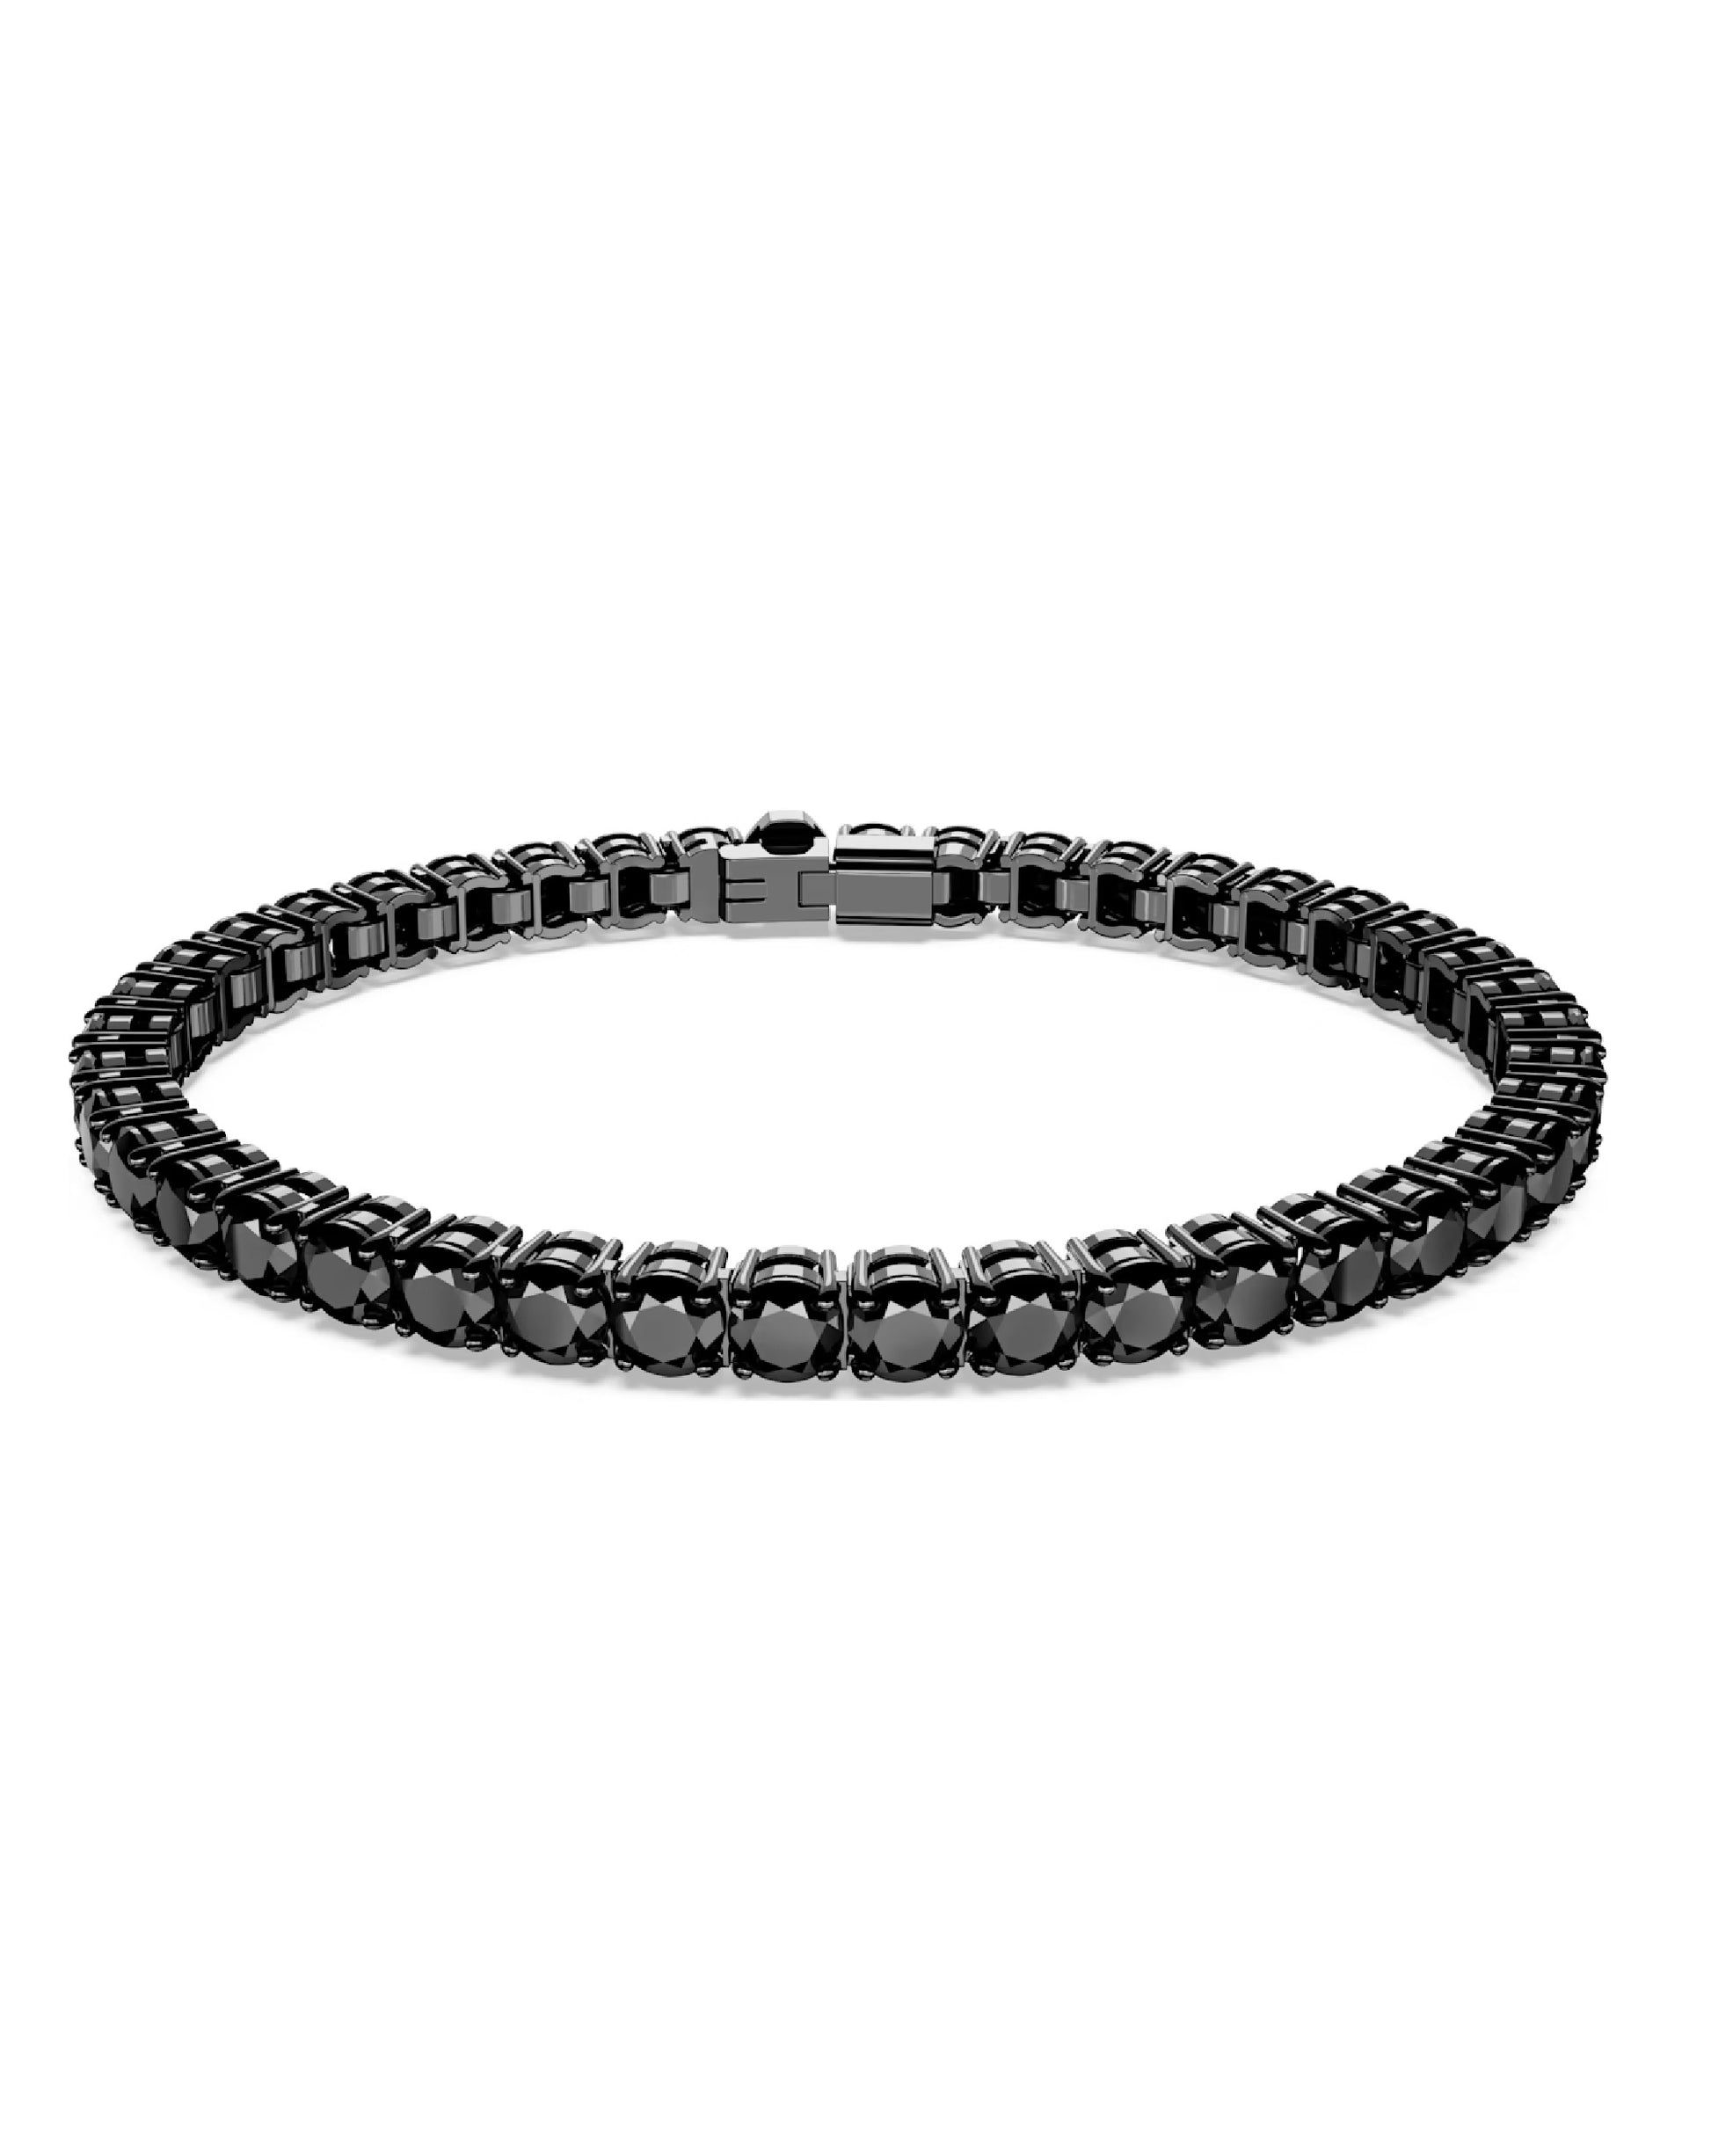 Swarovski 5664196 Swarovski Matrix BRACELET Size M, Black Ruthenium plated Bracelets